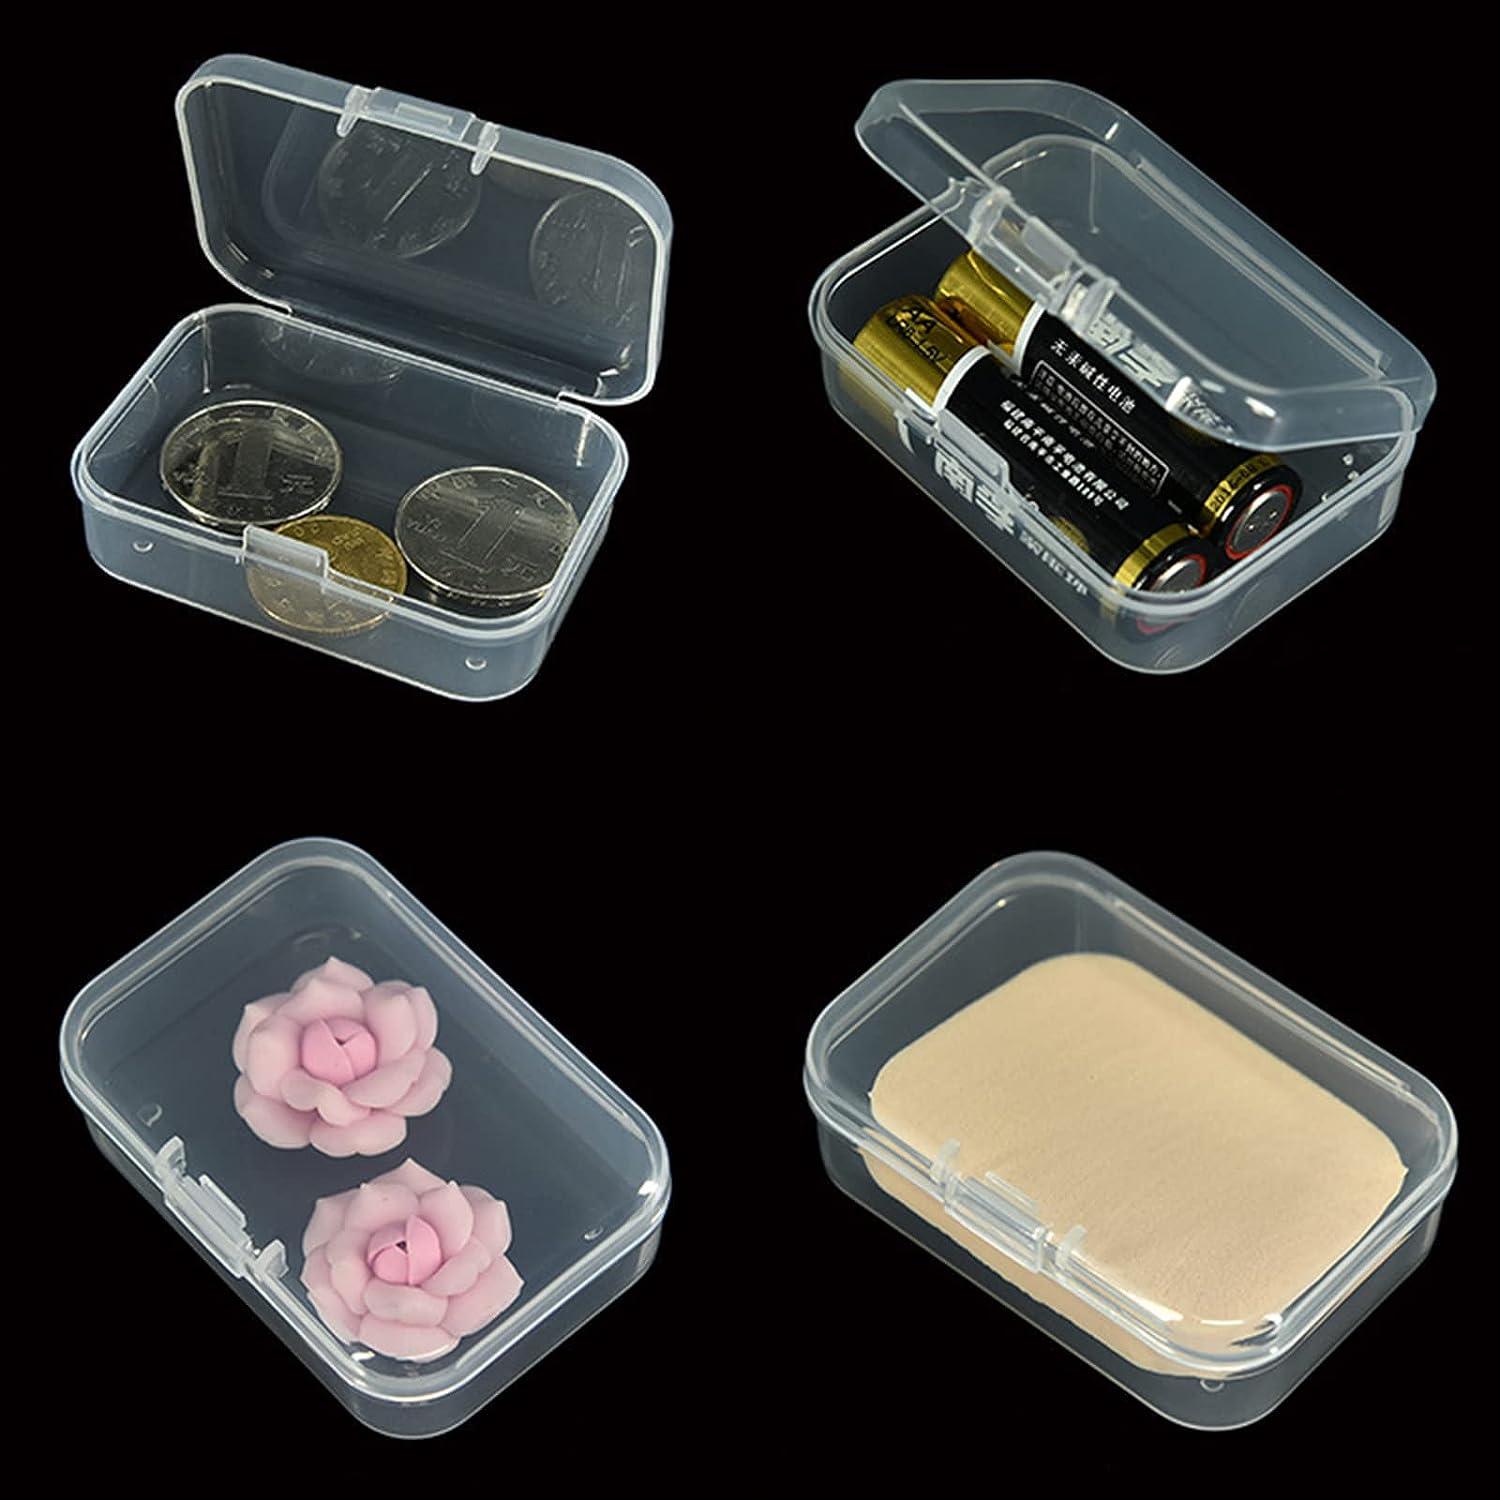 20pcs Small Storage Cases Transparent Plastic Containers Storage Boxes 